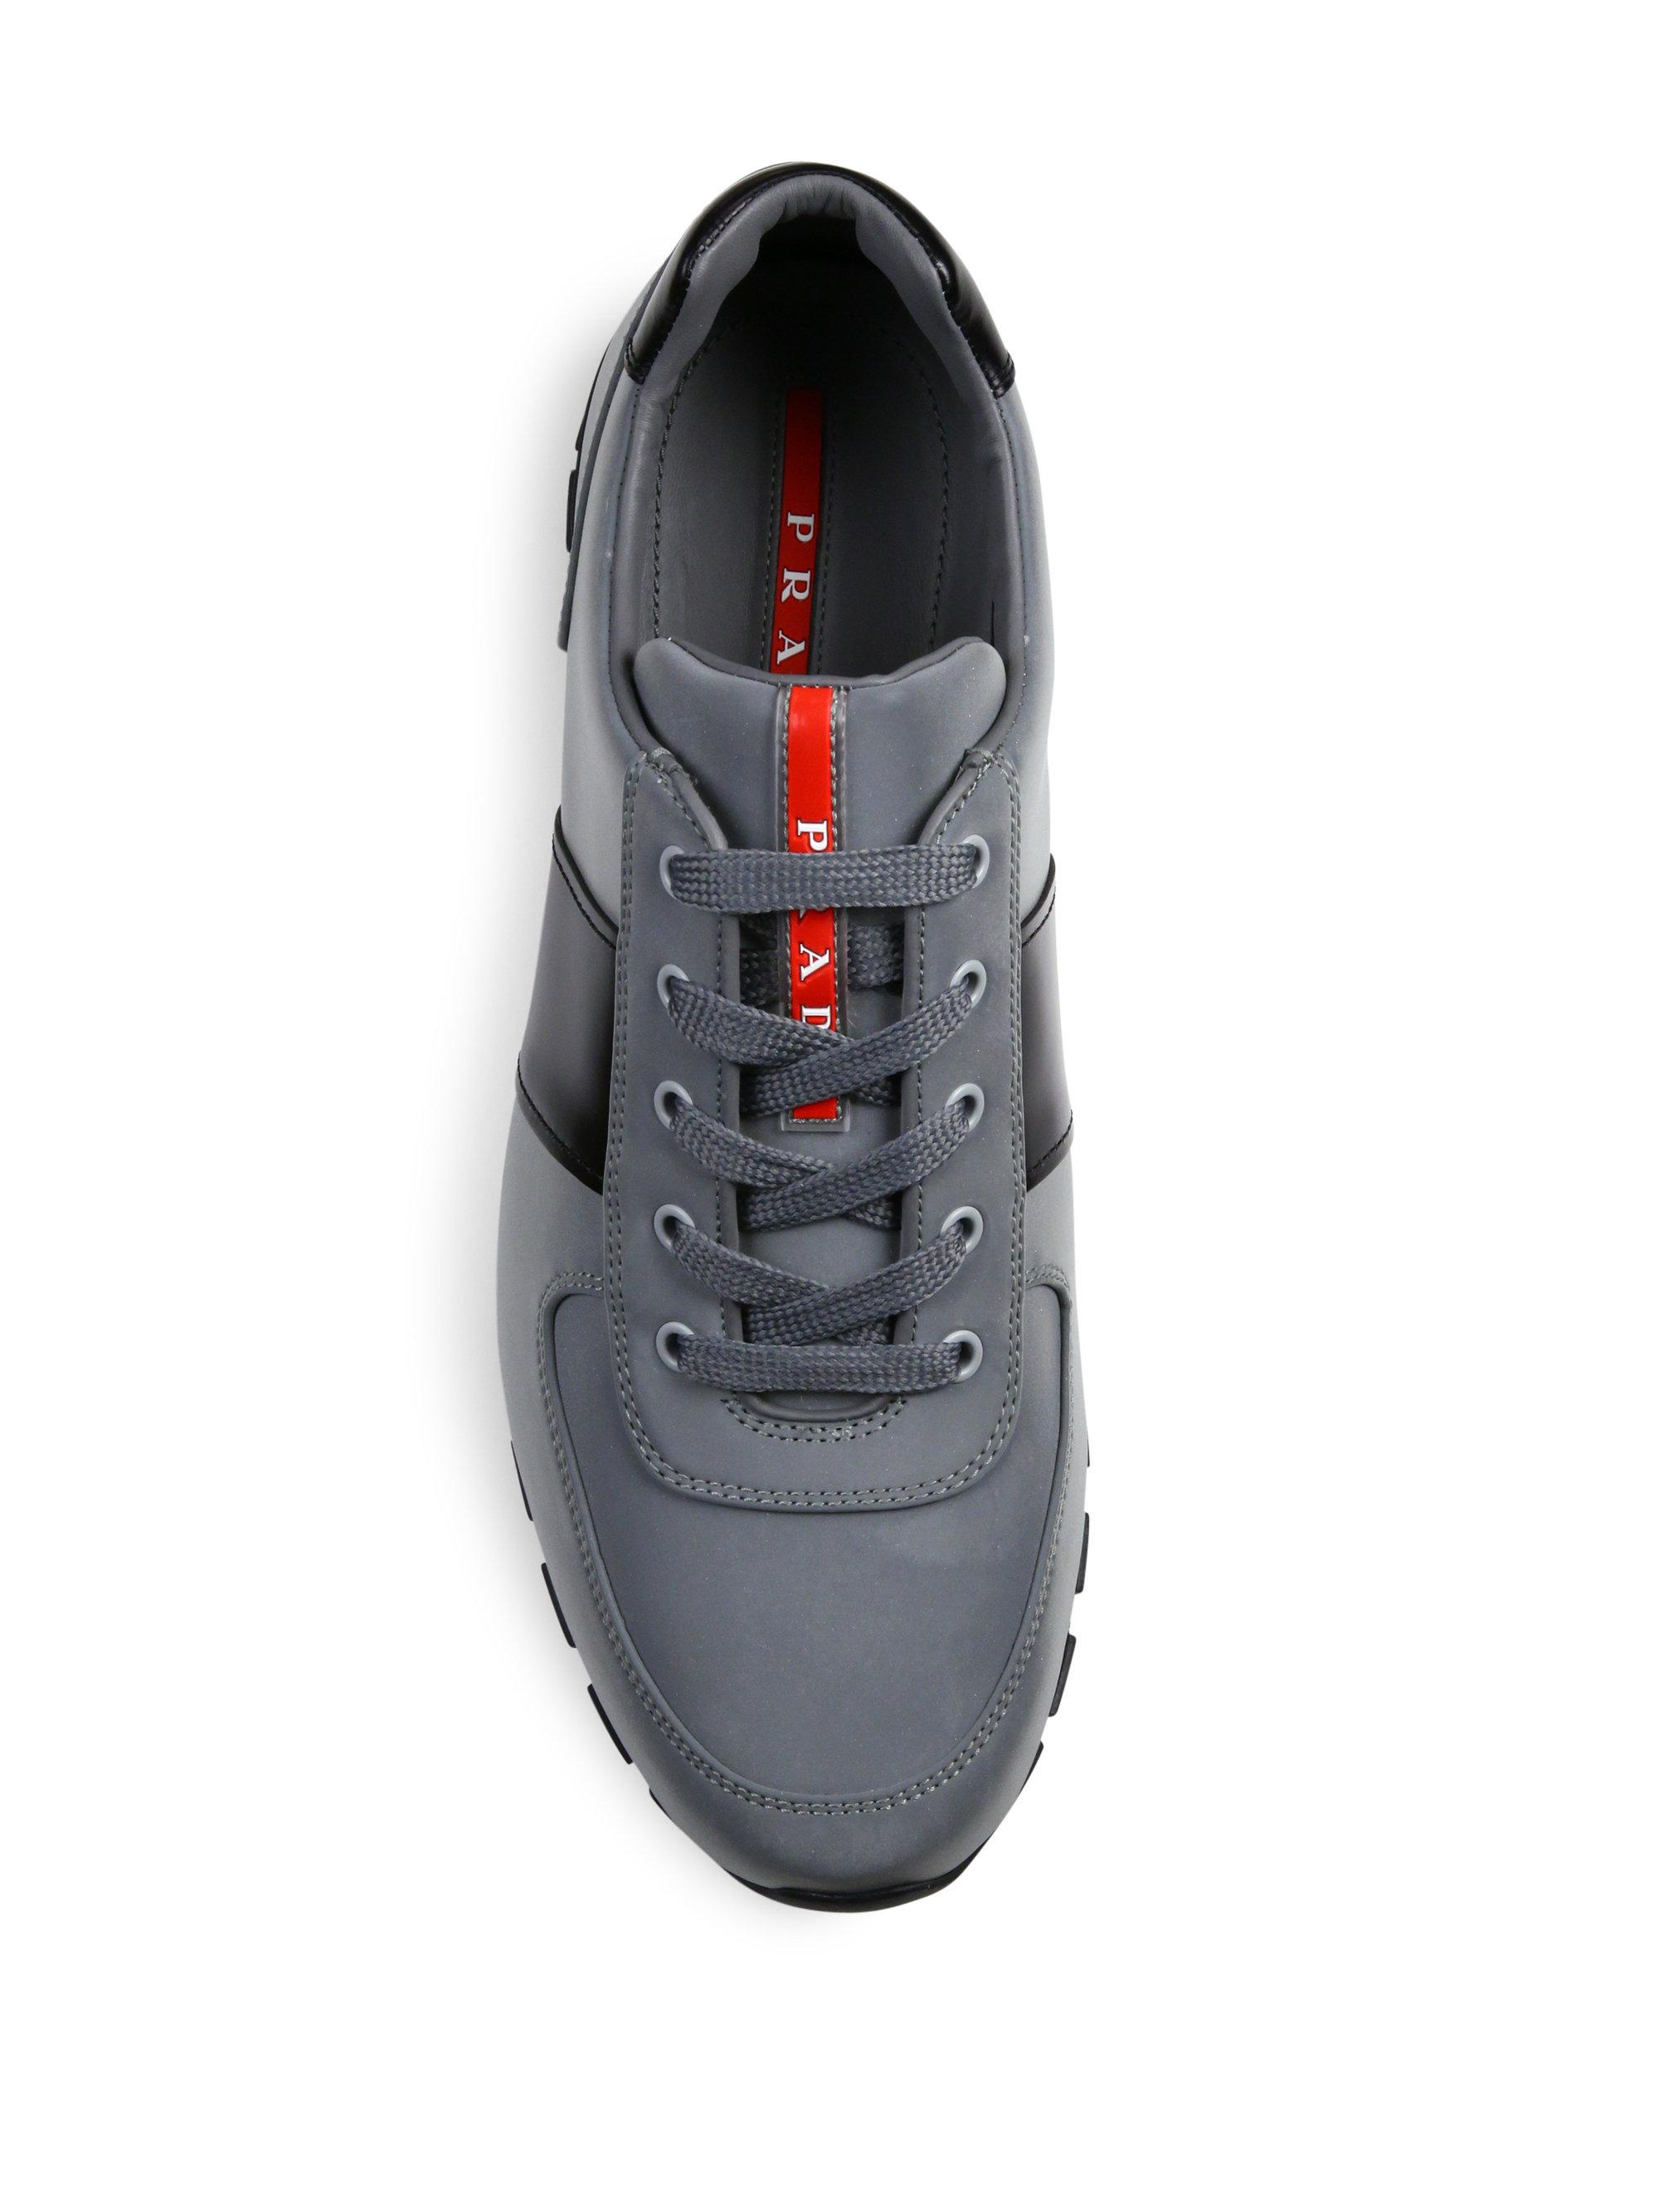 Prada Reflective Leather & Nylon Running Sneakers in Silver Black (Black)  for Men - Lyst